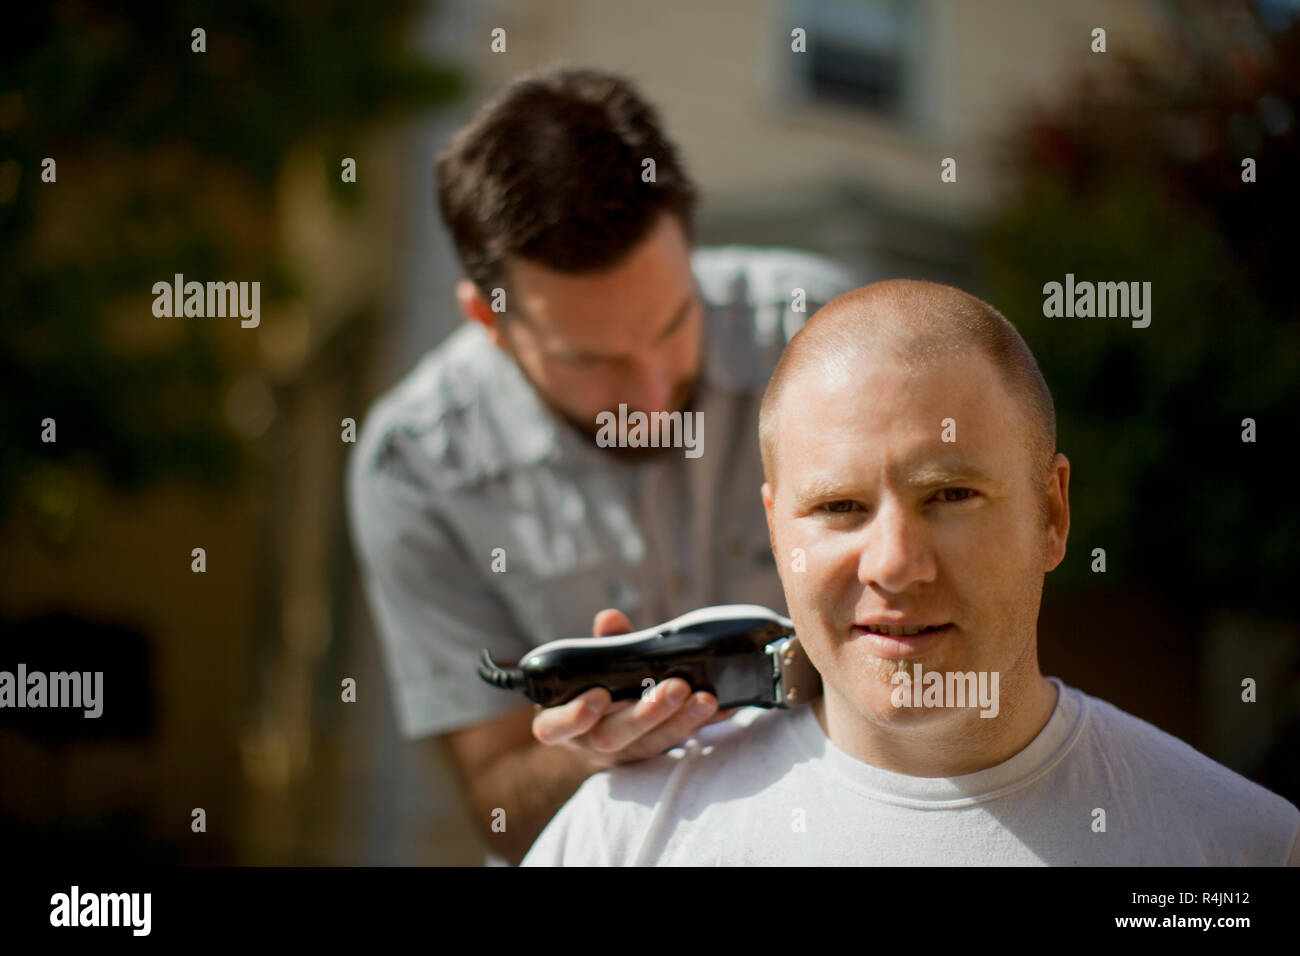 Man shaving another man's head. Stock Photo